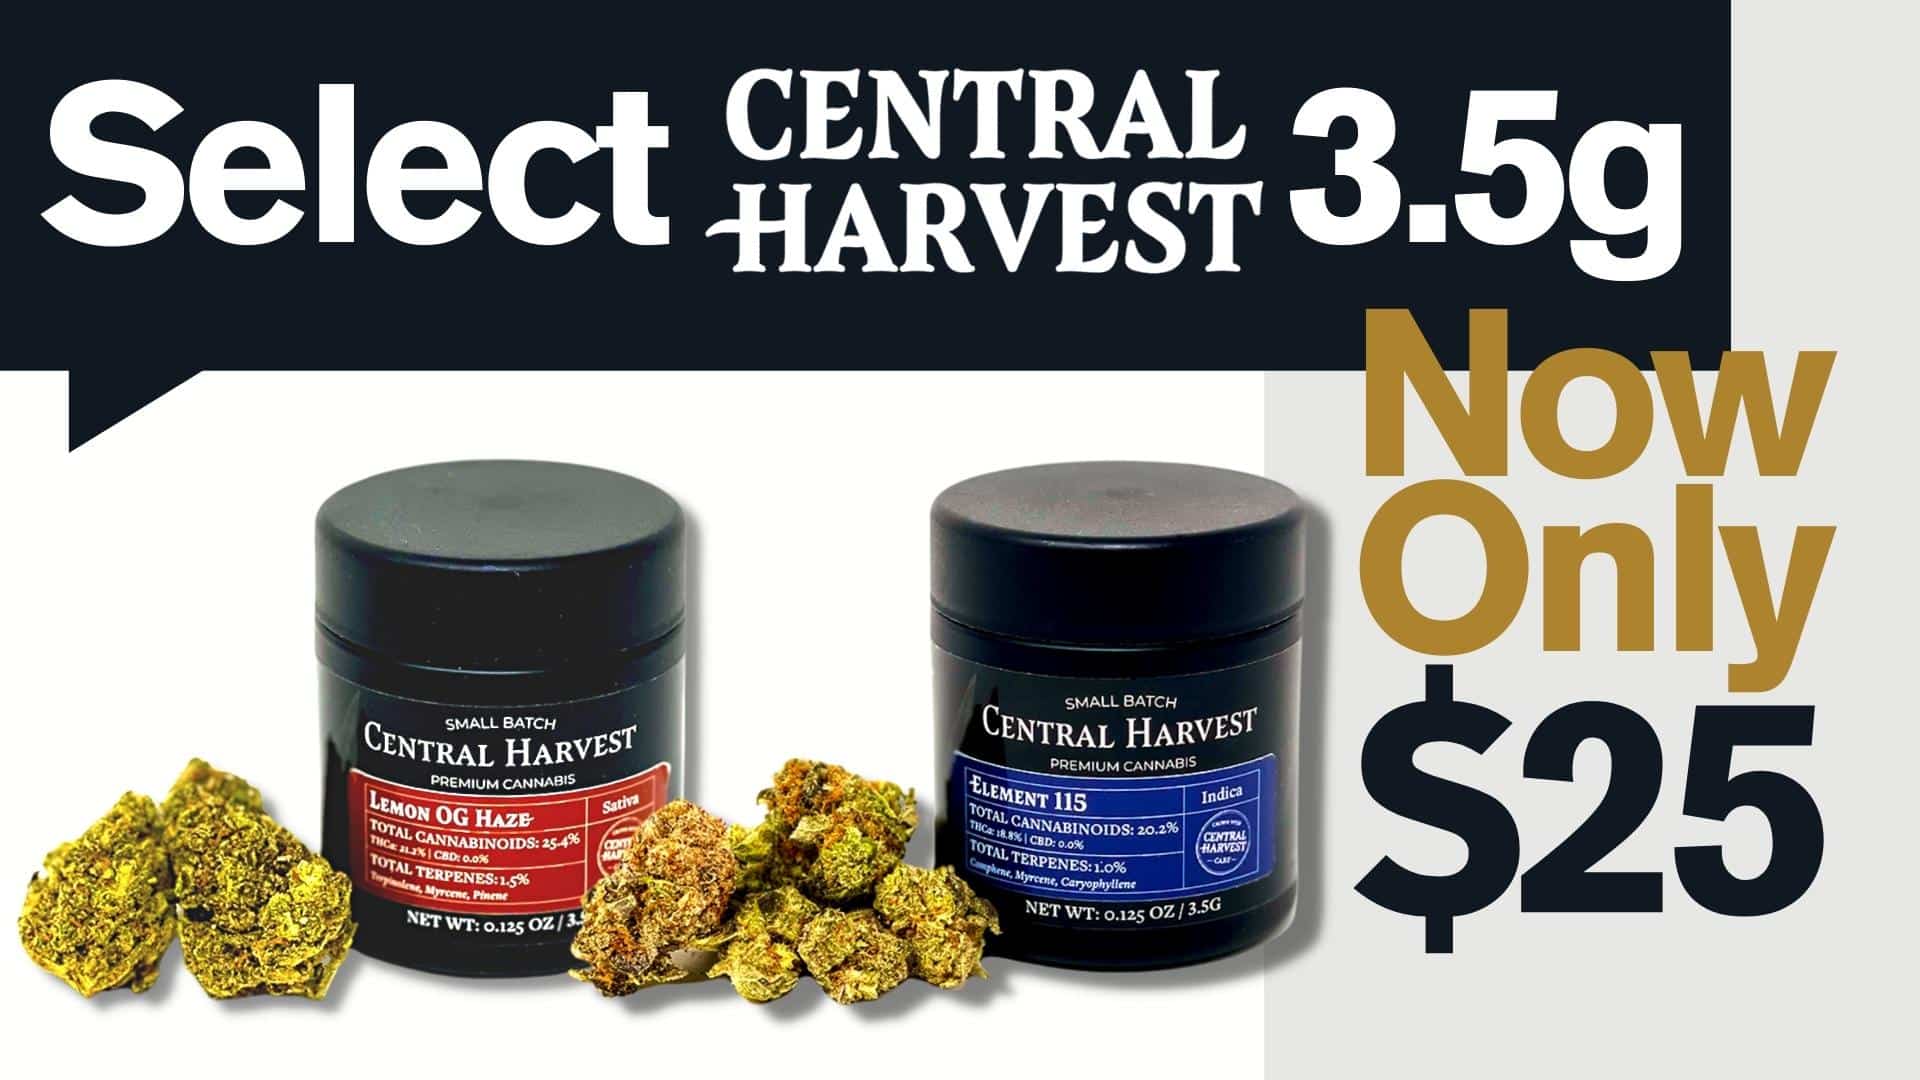 Select $25 3.5g Central Harvest